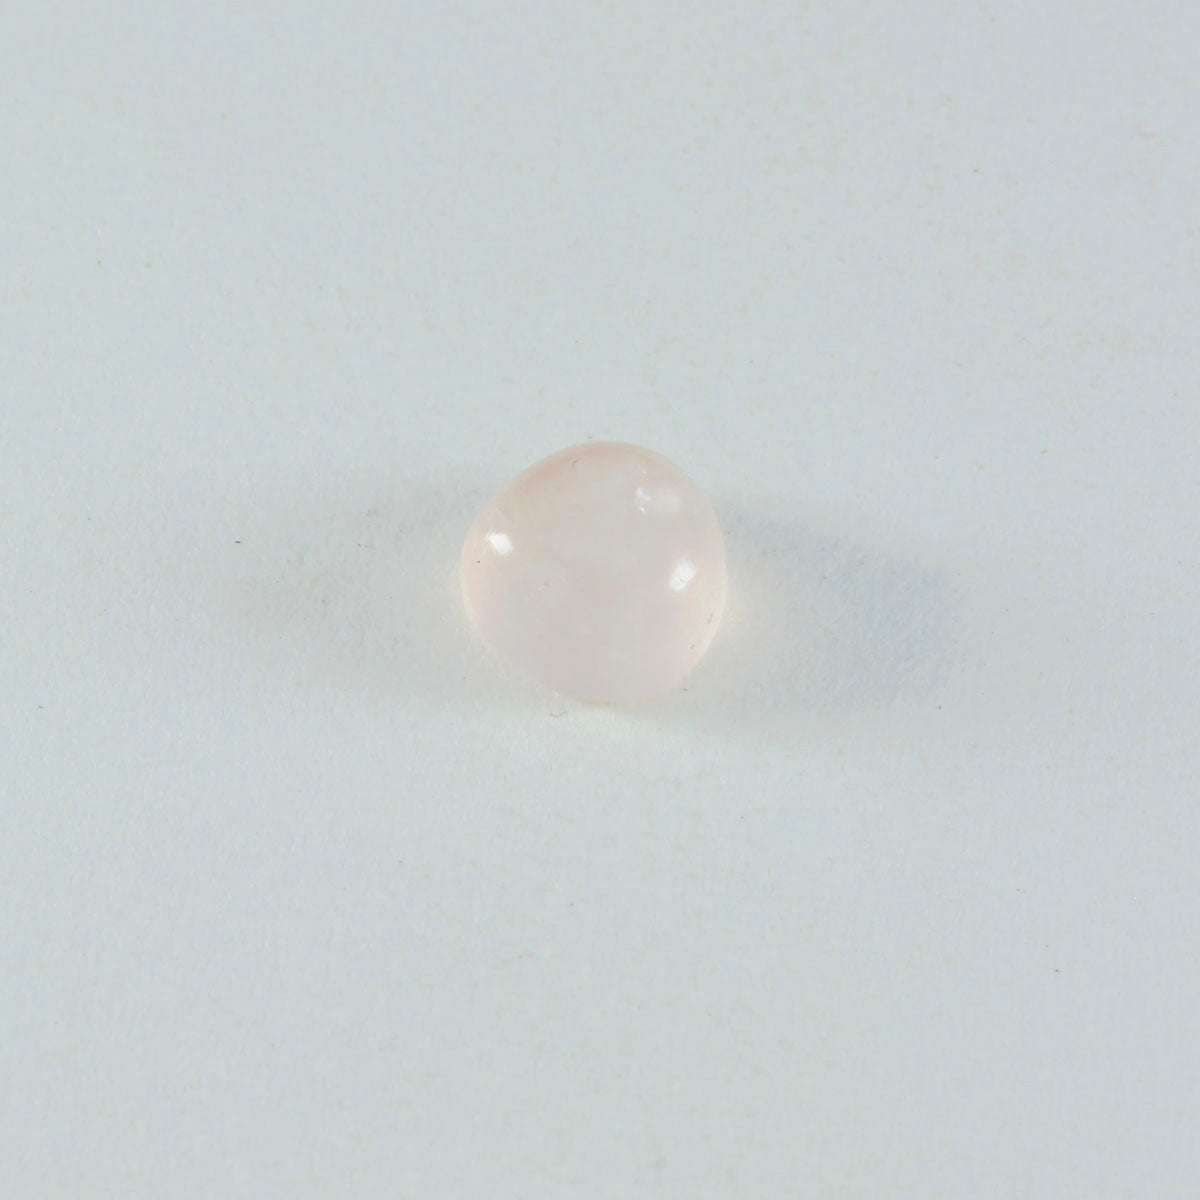 Riyogems 1PC Pink Rose Quartz Cabochon 13x13 mm Heart Shape A+ Quality Loose Stone